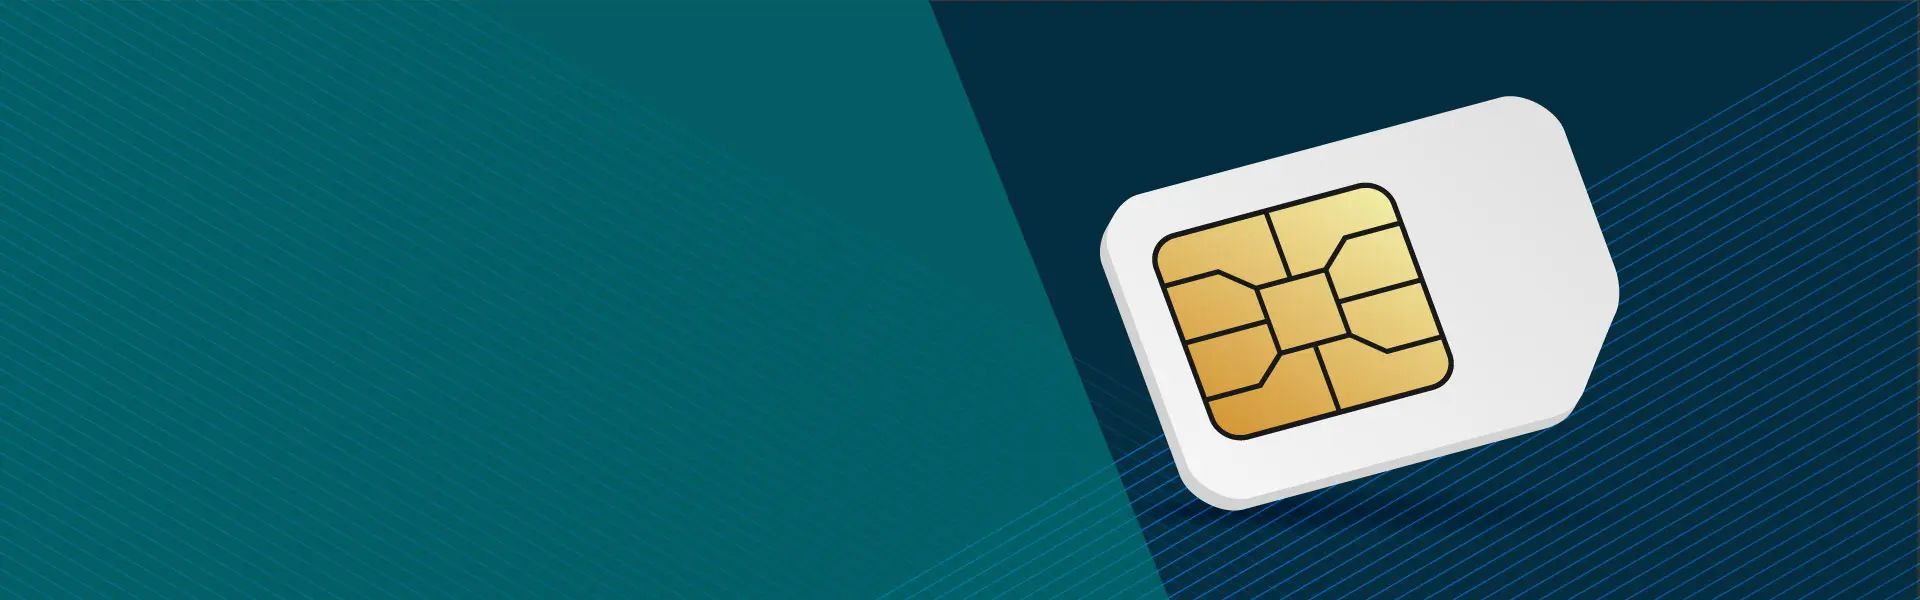 Unlocking MetroPCS SIM Card: A Step-by-Step Guide